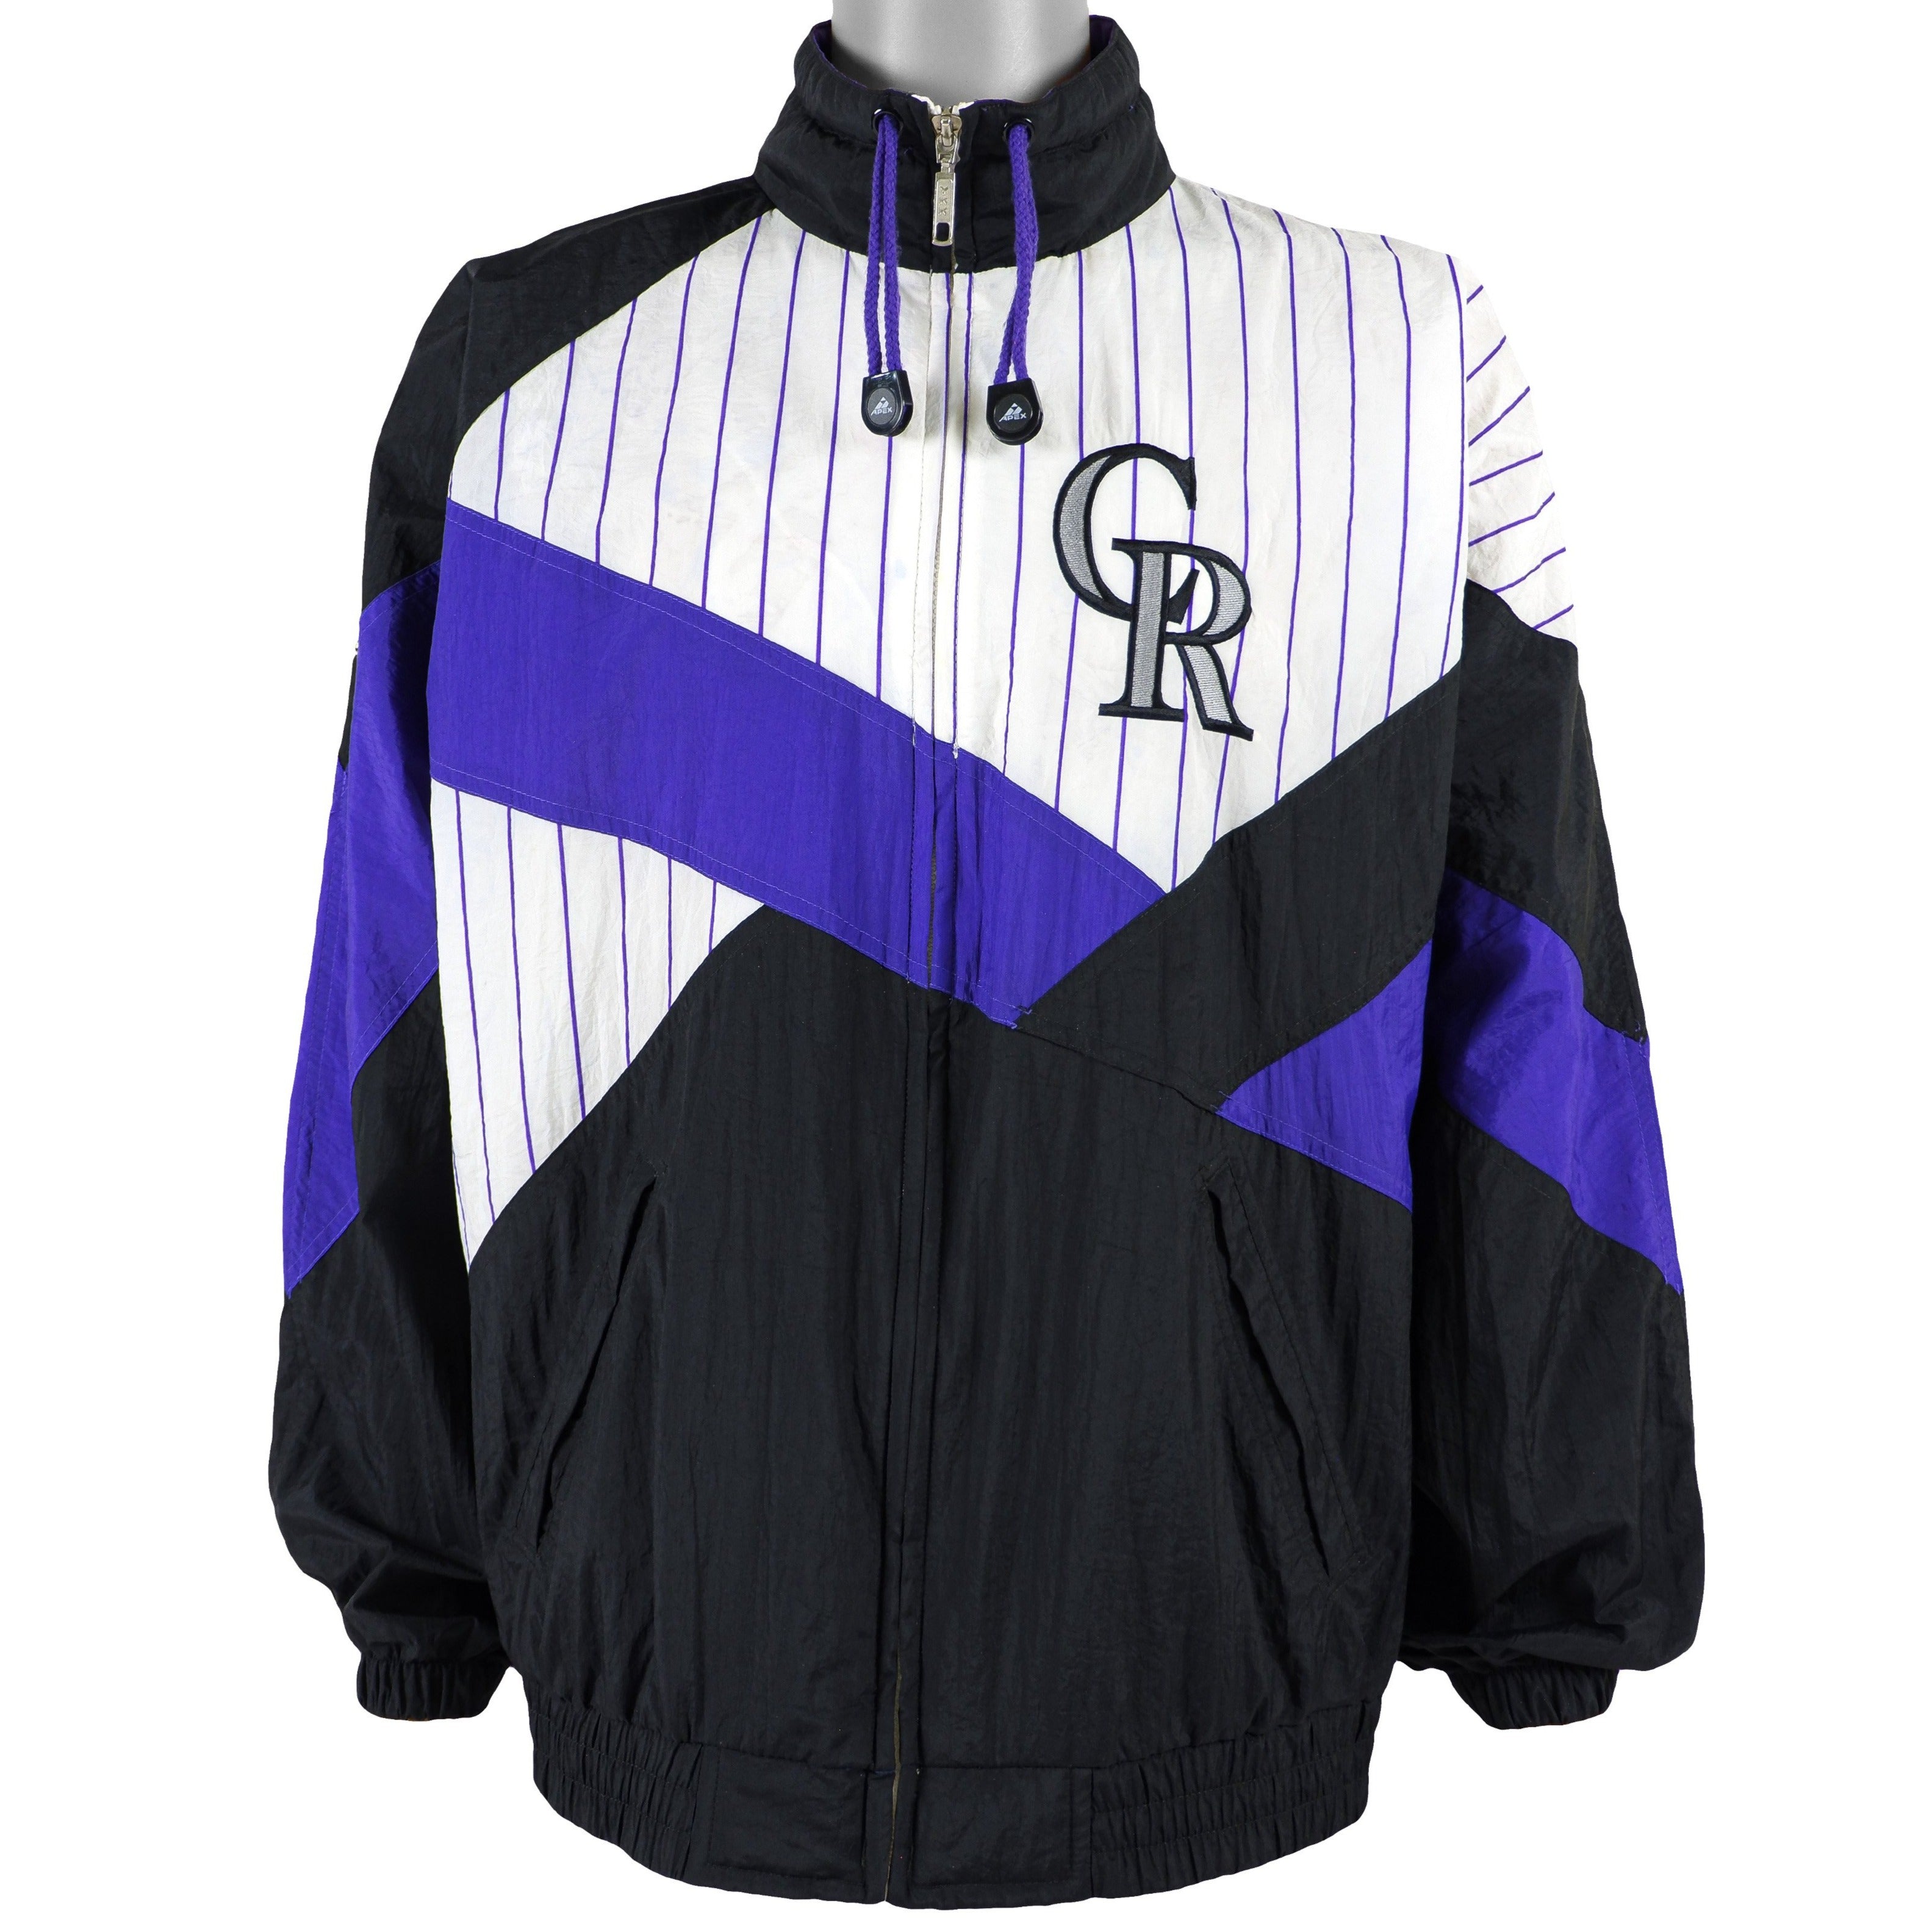 Vintage Colorado Rockies MLB Windbreaker Jacket